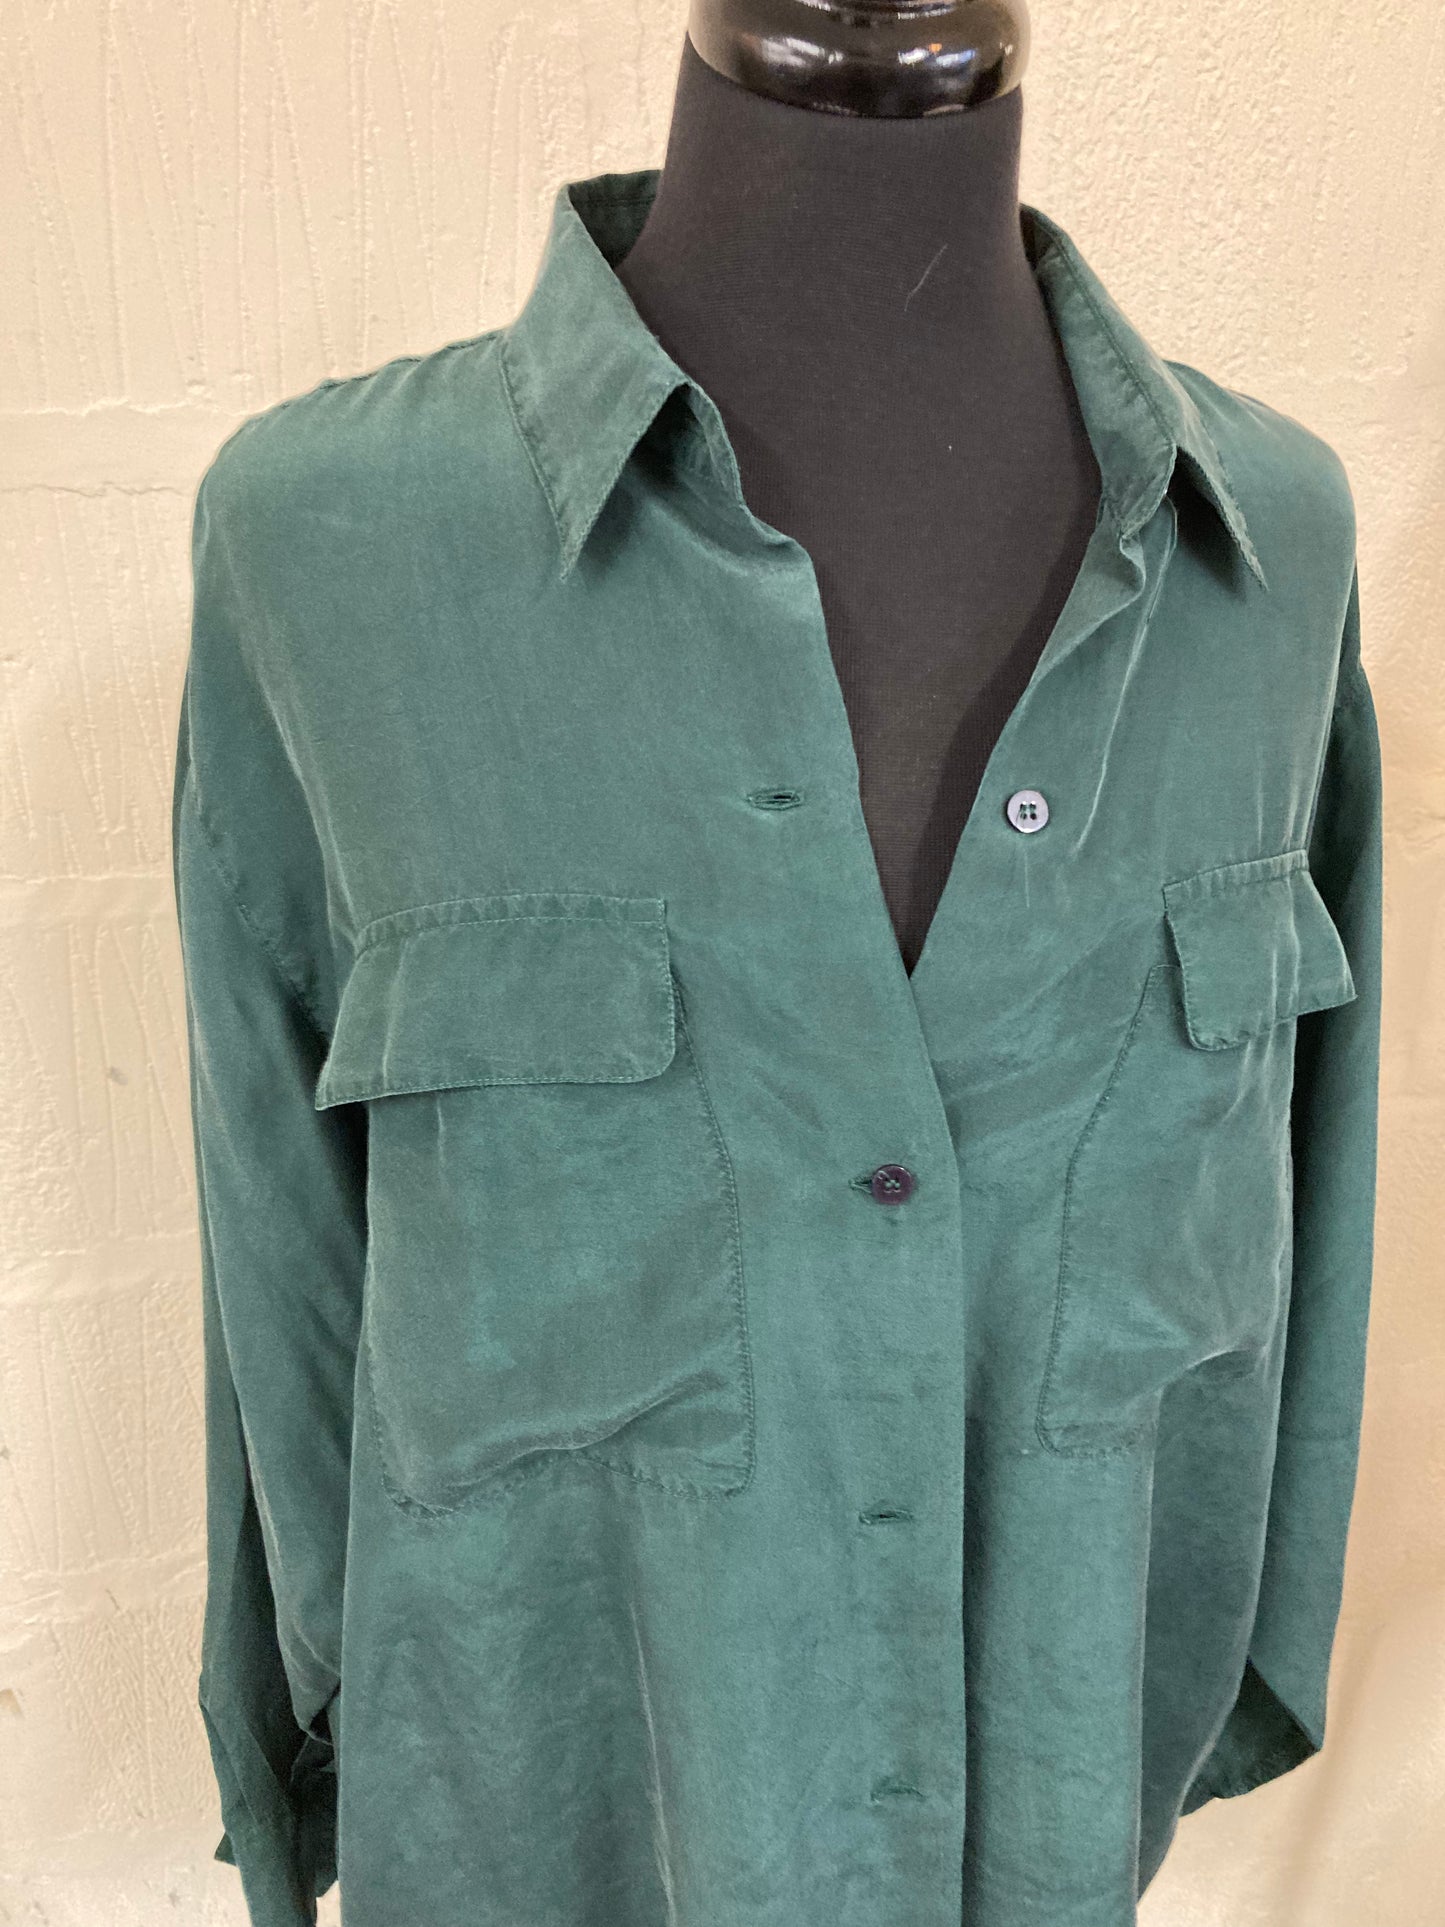 1990s New Look Oversize Dark Green Silk Shirt size M/L